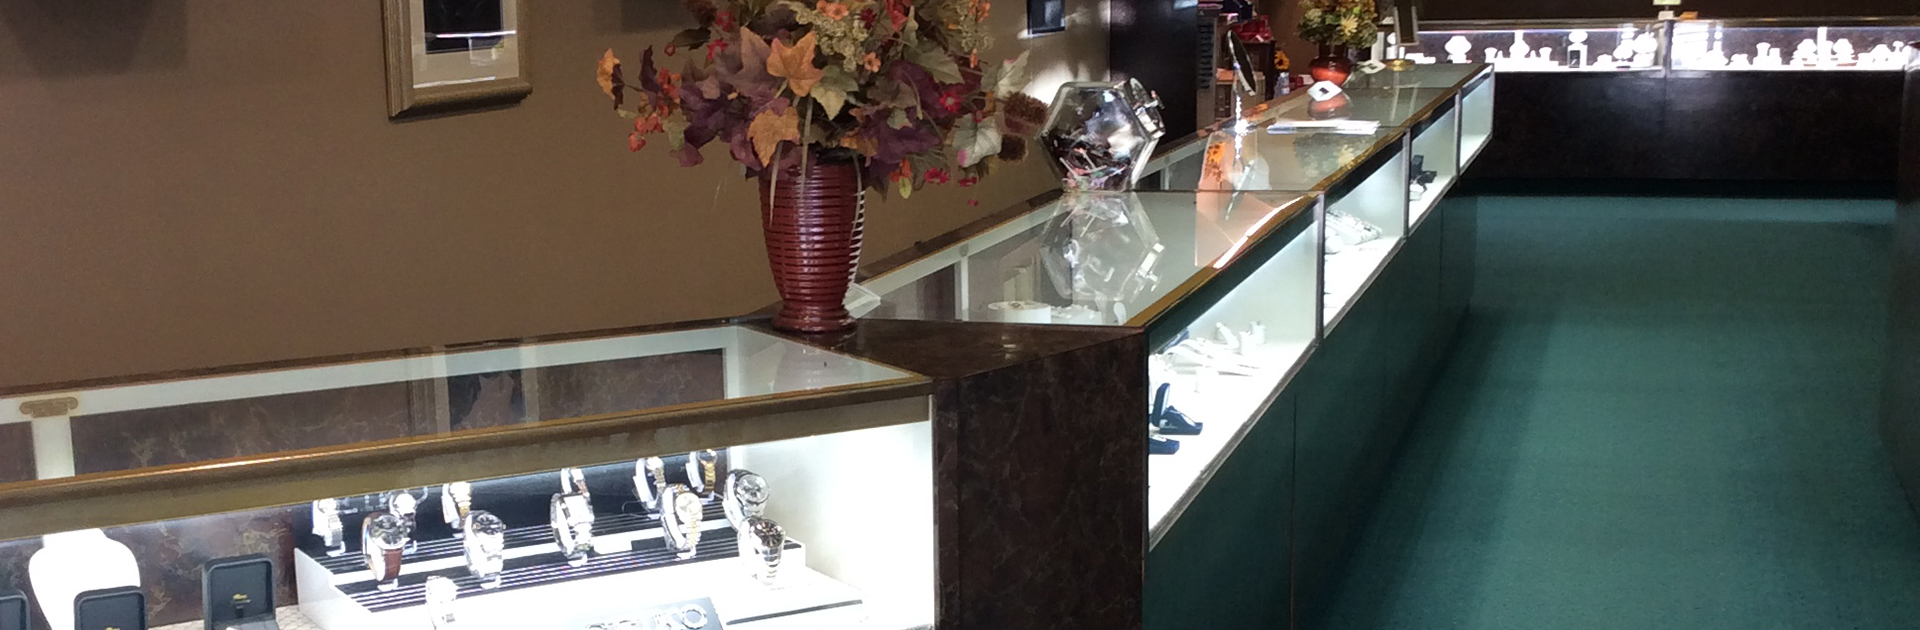 Plaza Jewelry Counter